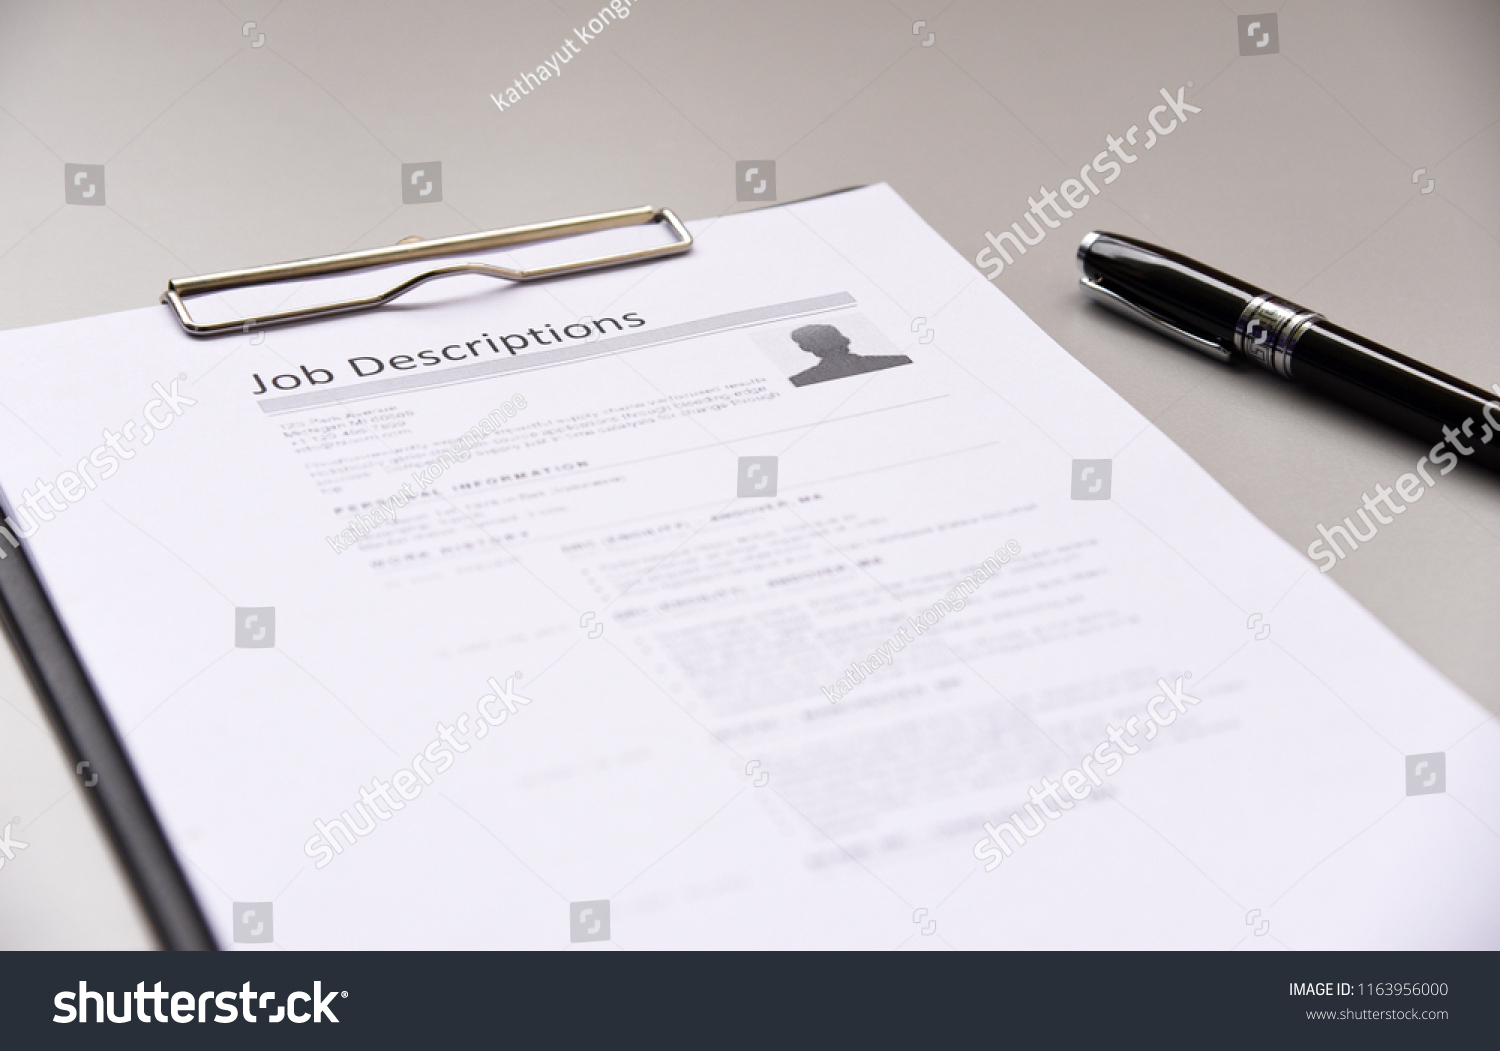 job description paper In office. #1163956000